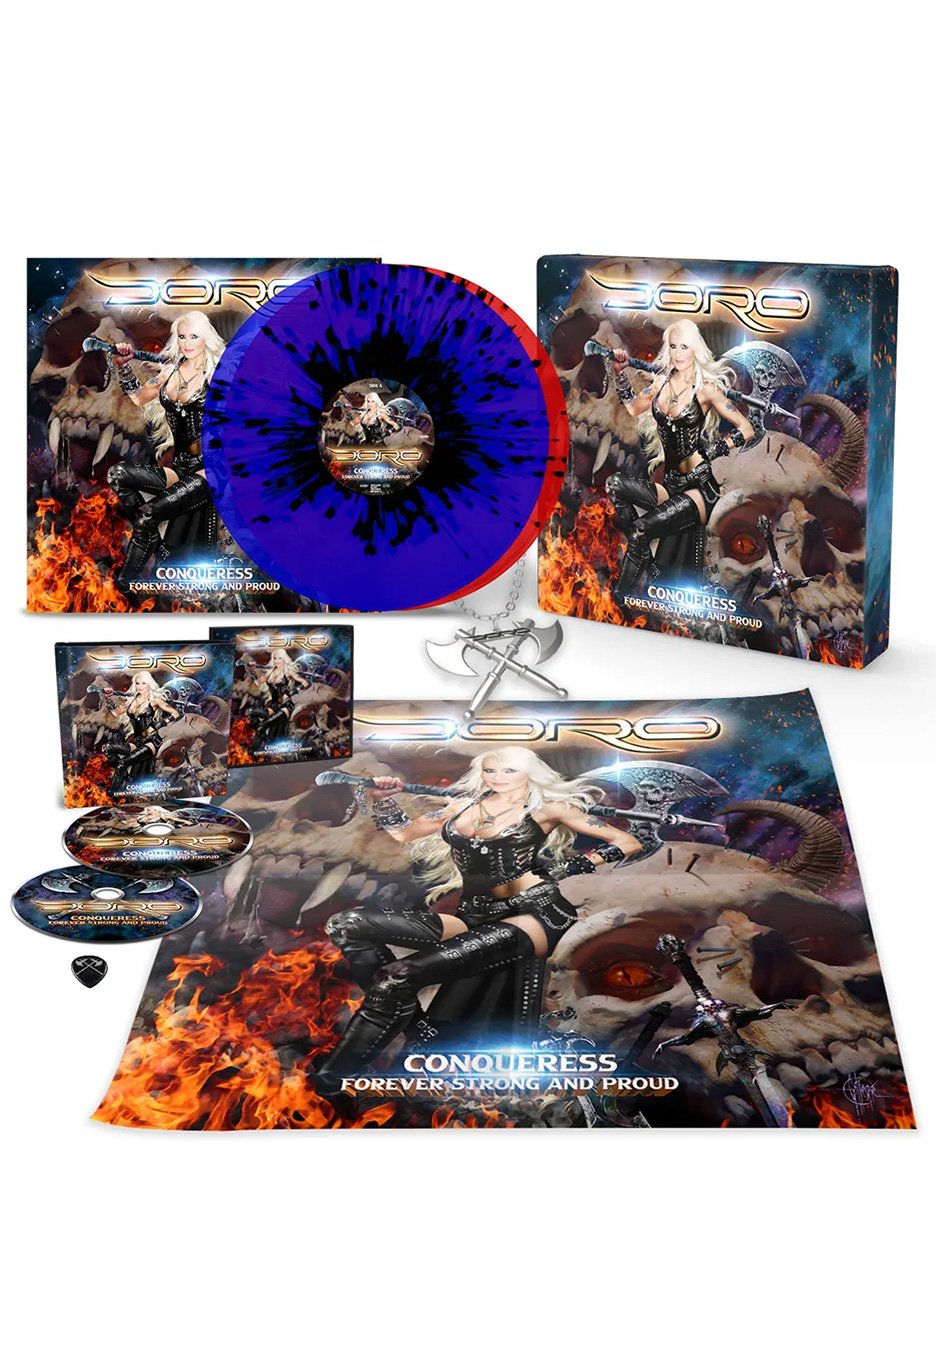 Doro - Conqueress - Forever Strong And Proud Blue w/ Black & Red w/ Black - Splattered 2 Vinyl + Digipak 2 CD